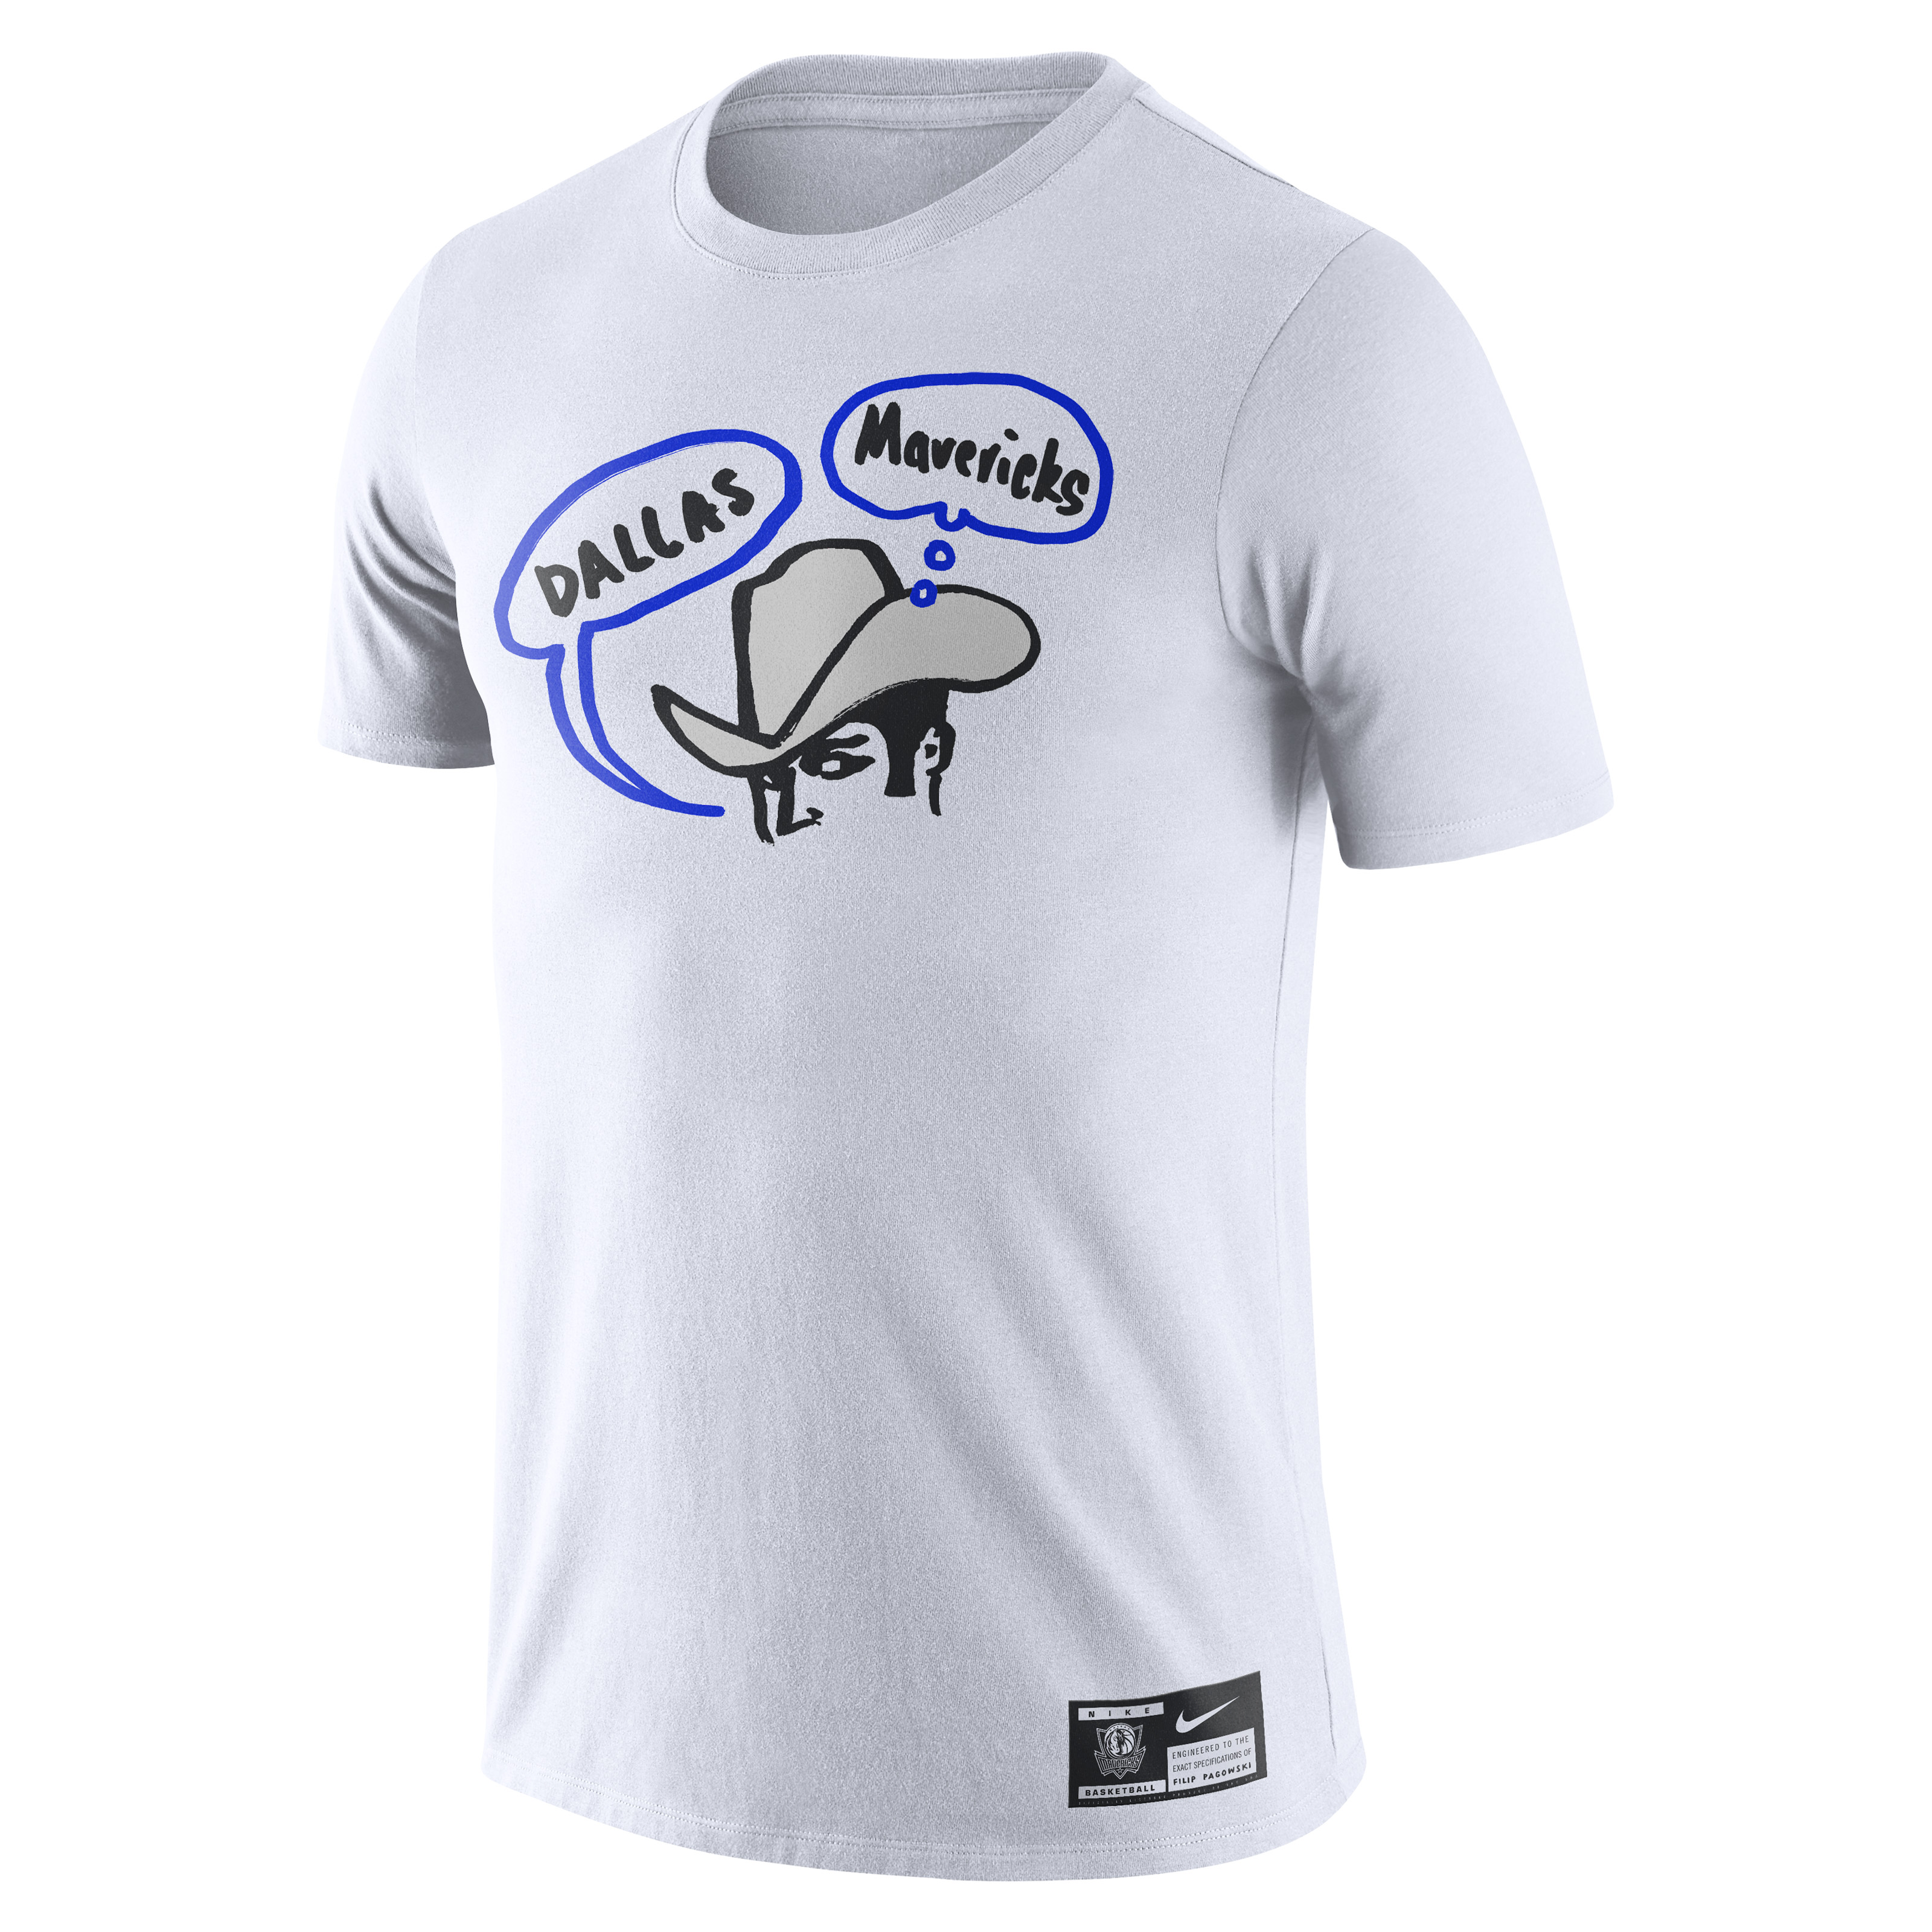 Filip Pagowski Nike T shirt &#x27;Dallas Mavericks&#x27;